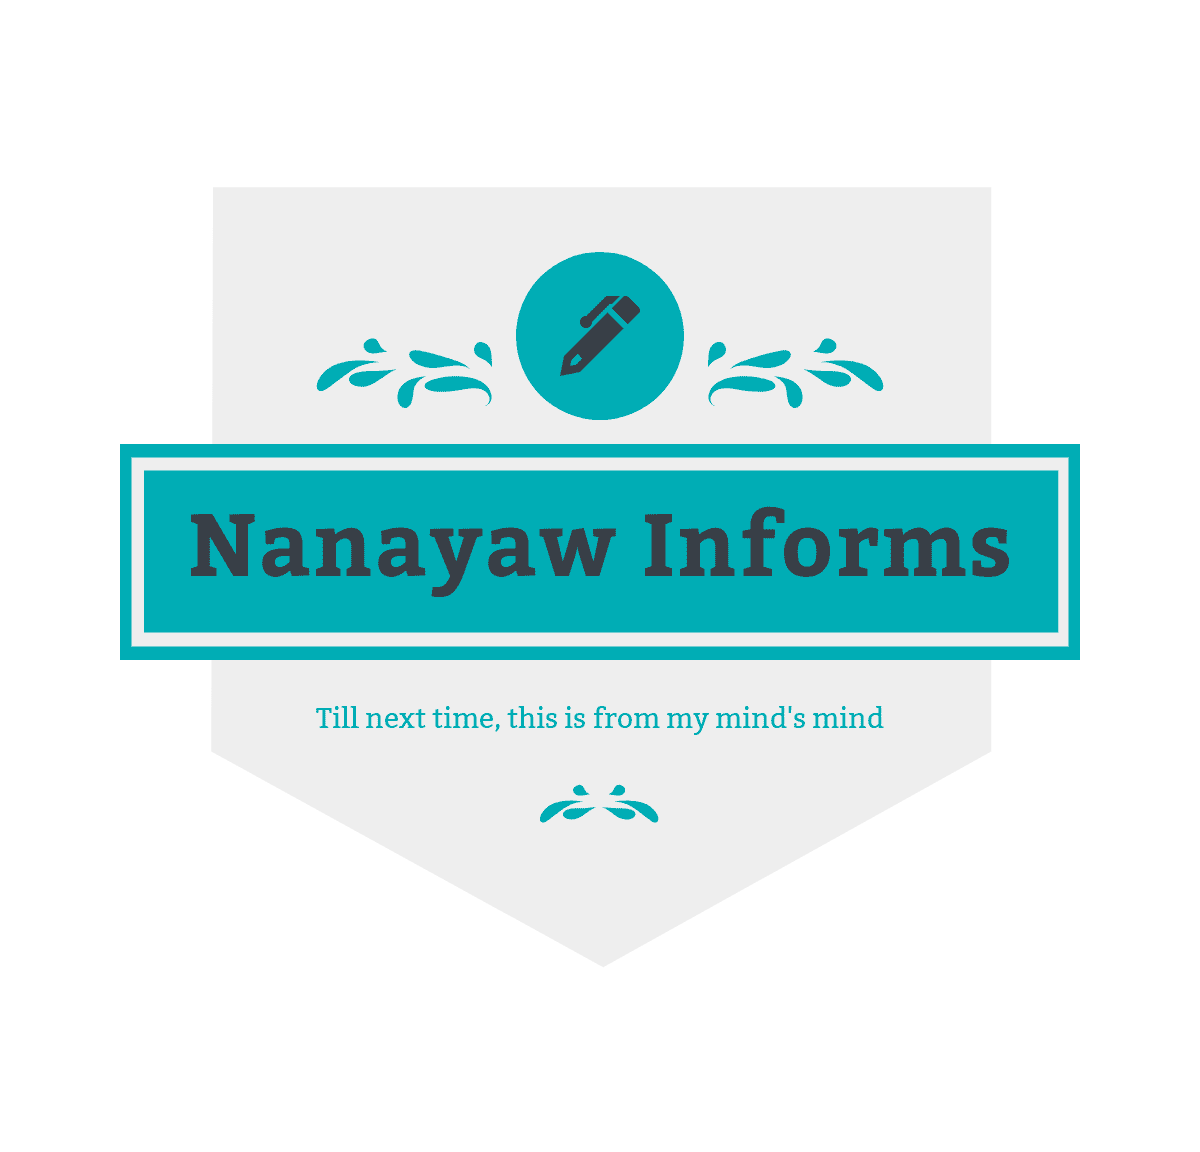 Nanayaw informs